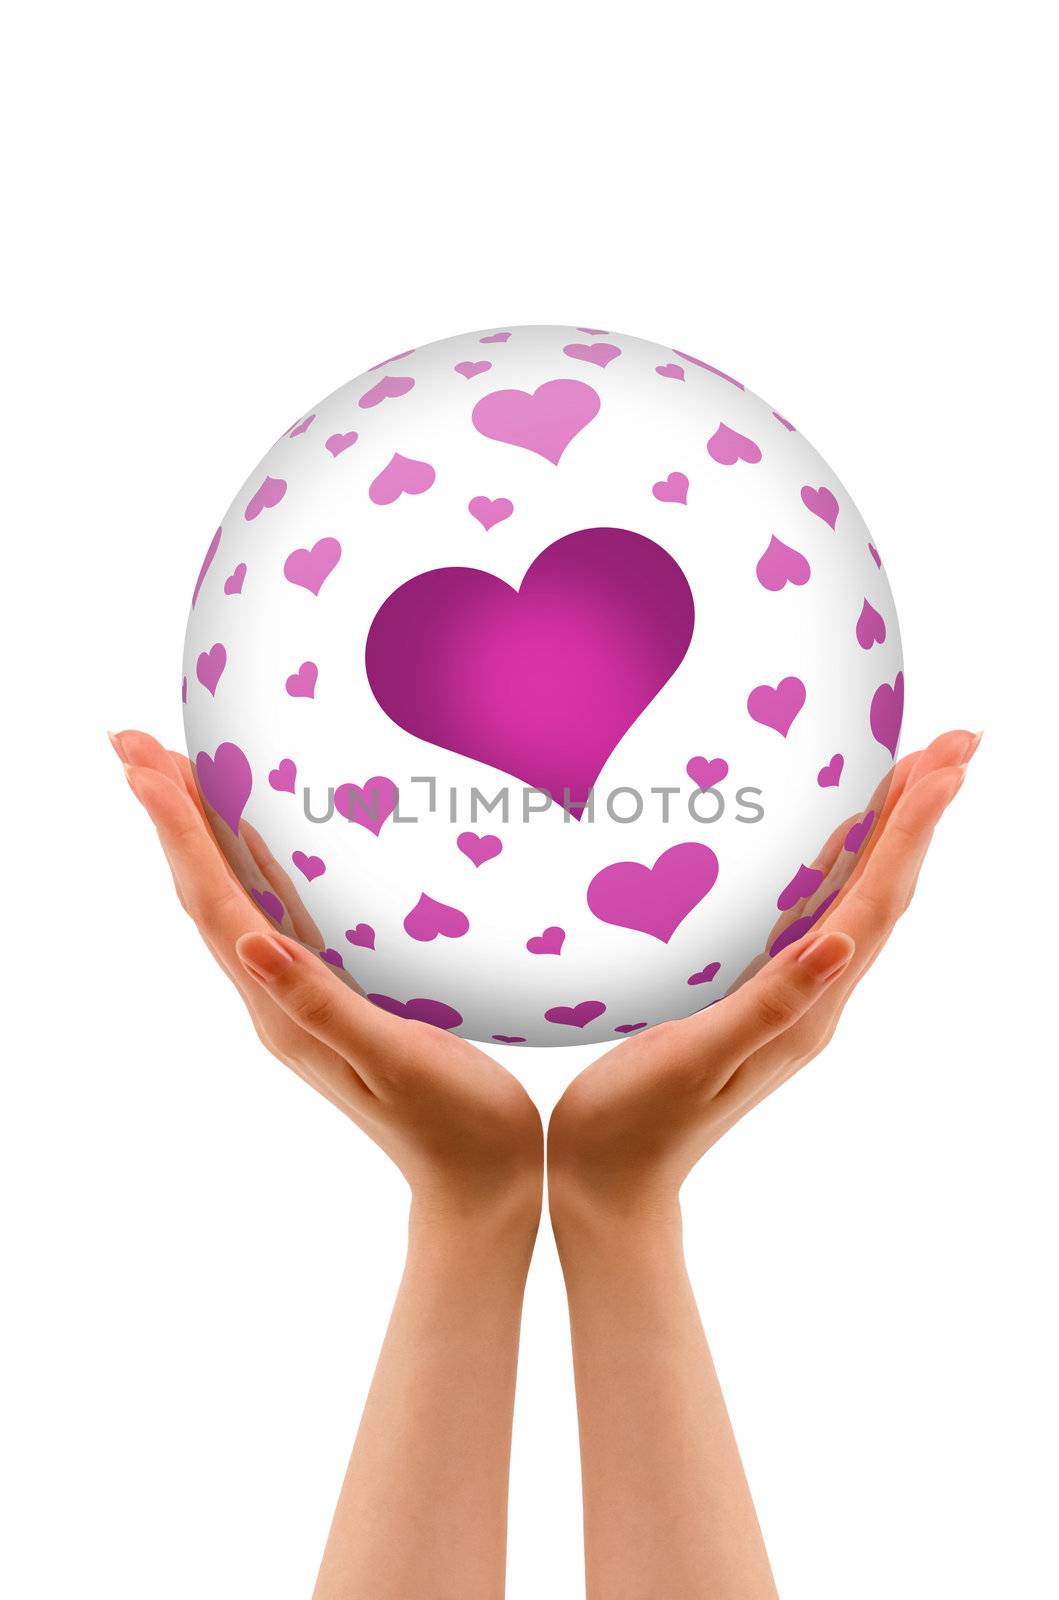 Hands holding a Love Sphere by kbuntu